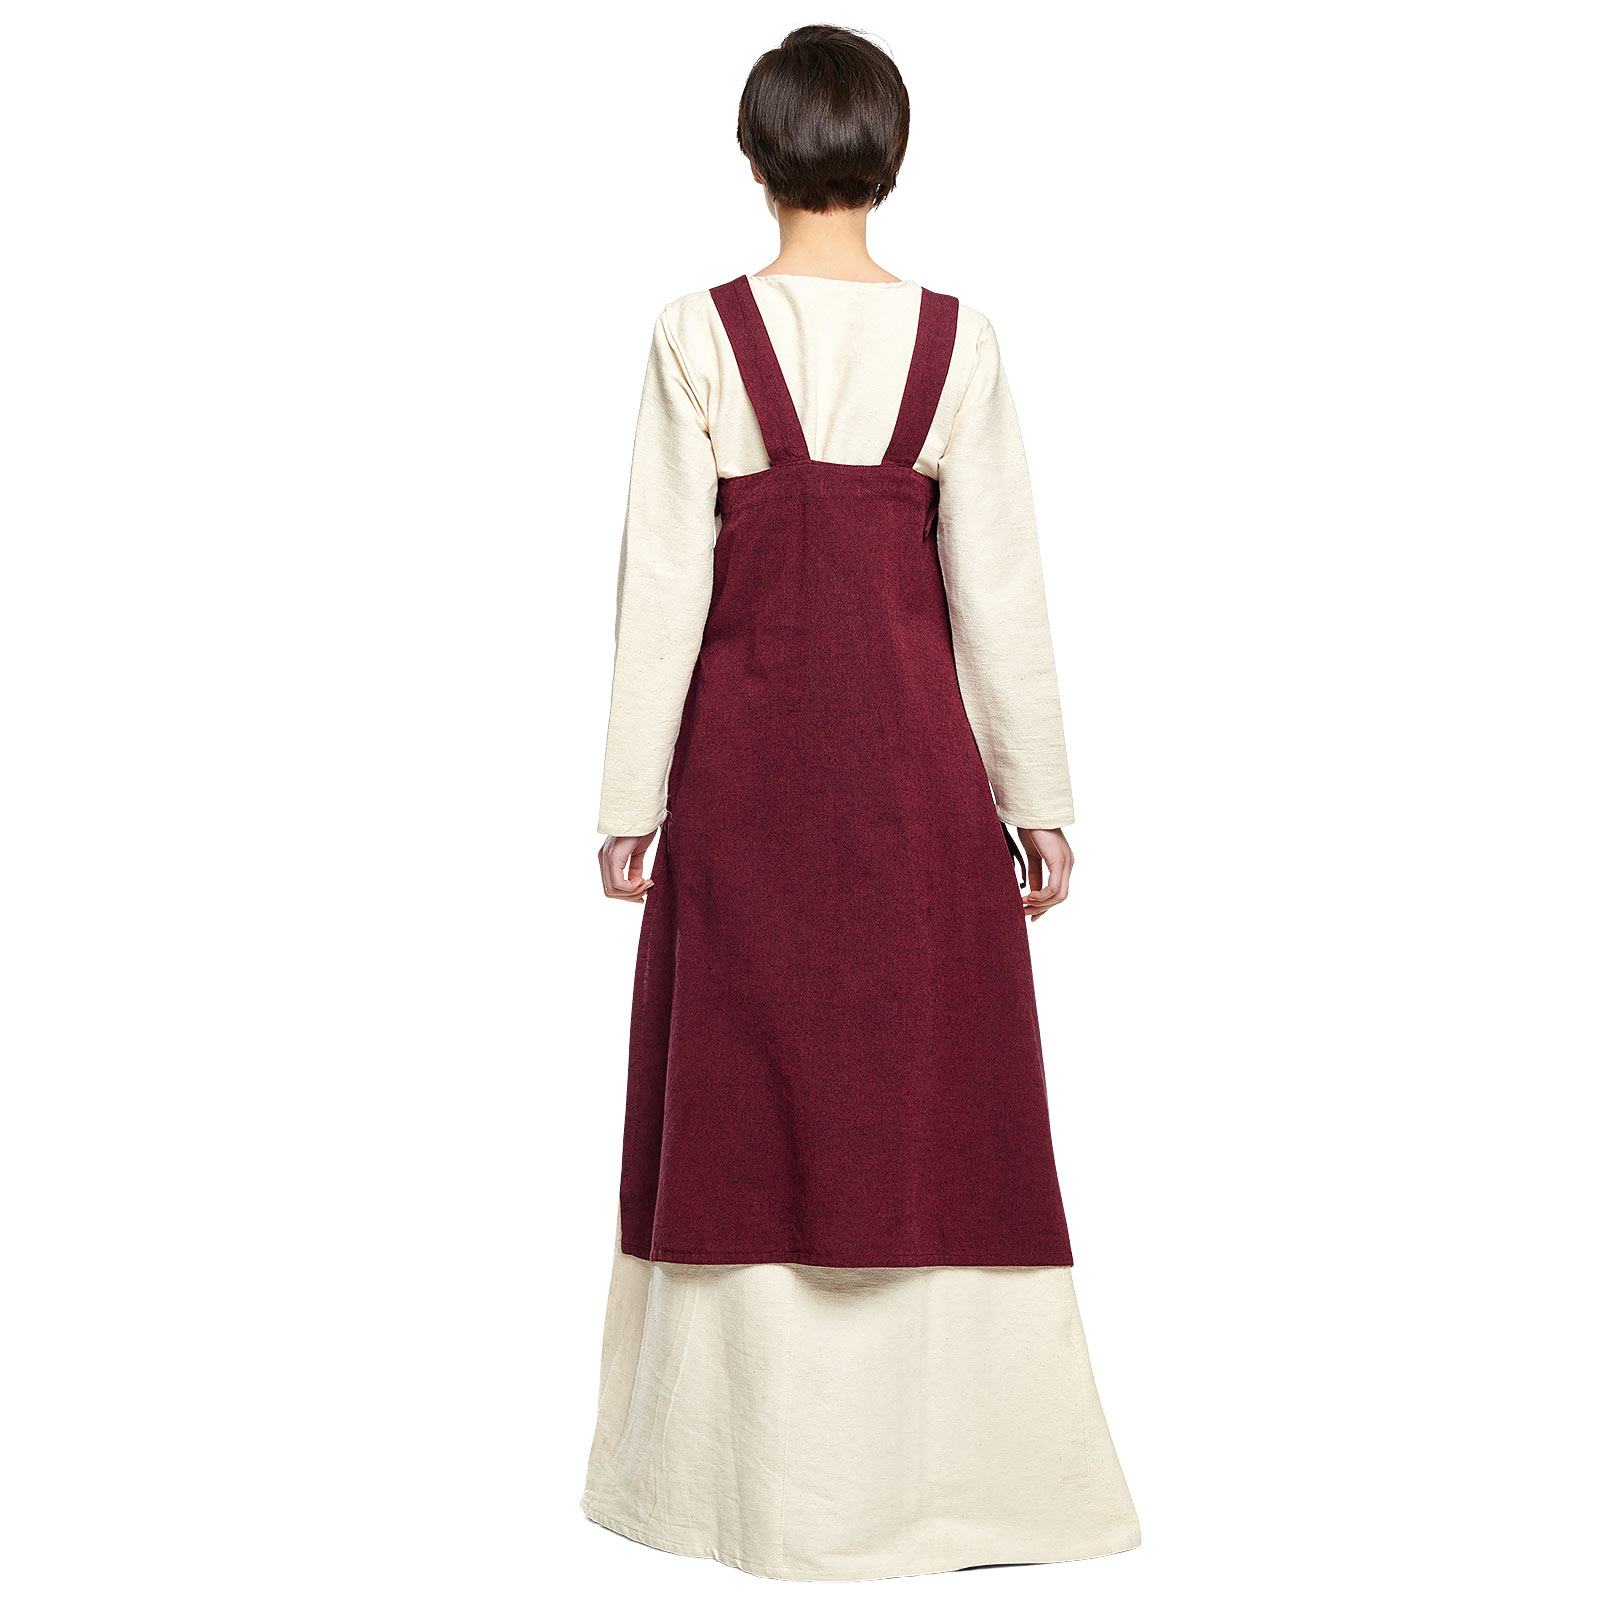 Sur-robe médiévale Hildegard rouge